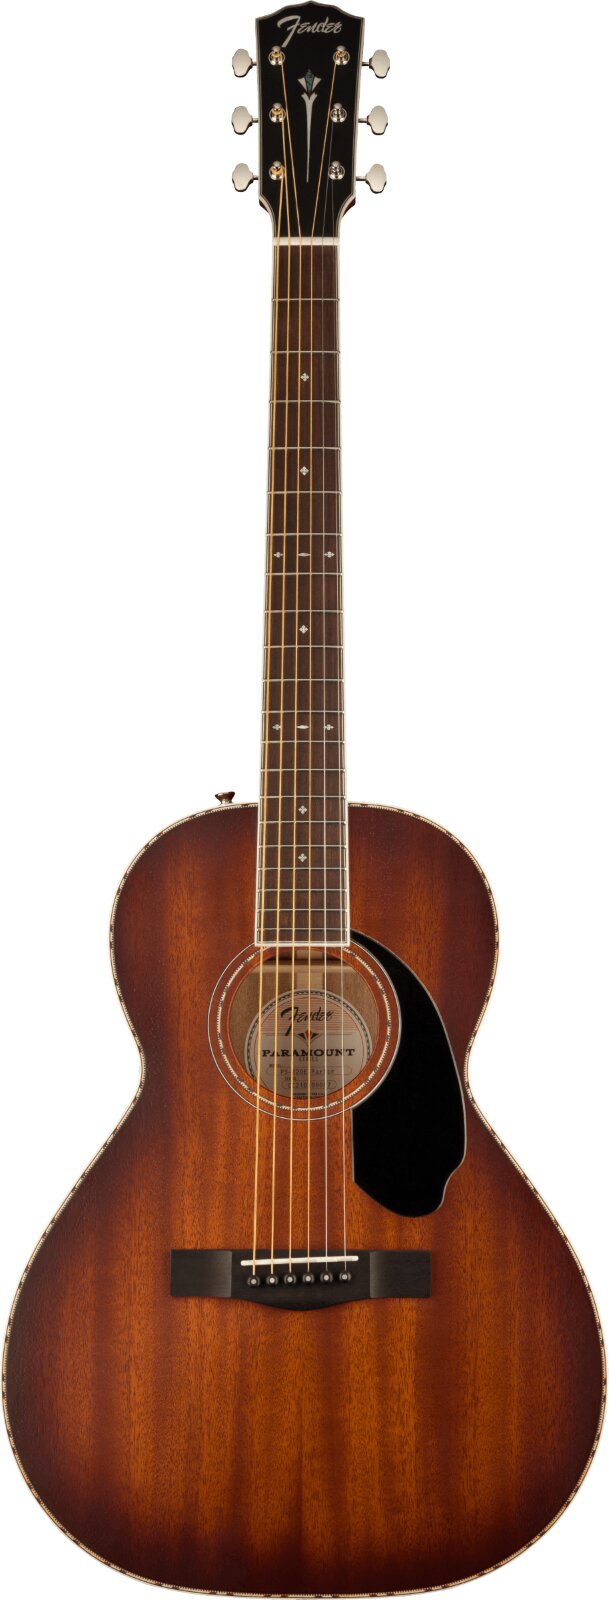 Fender PS-220E Parlor, All Mahogany, Ovangkol Fingerboard, Aged Cognac Burst : photo 1